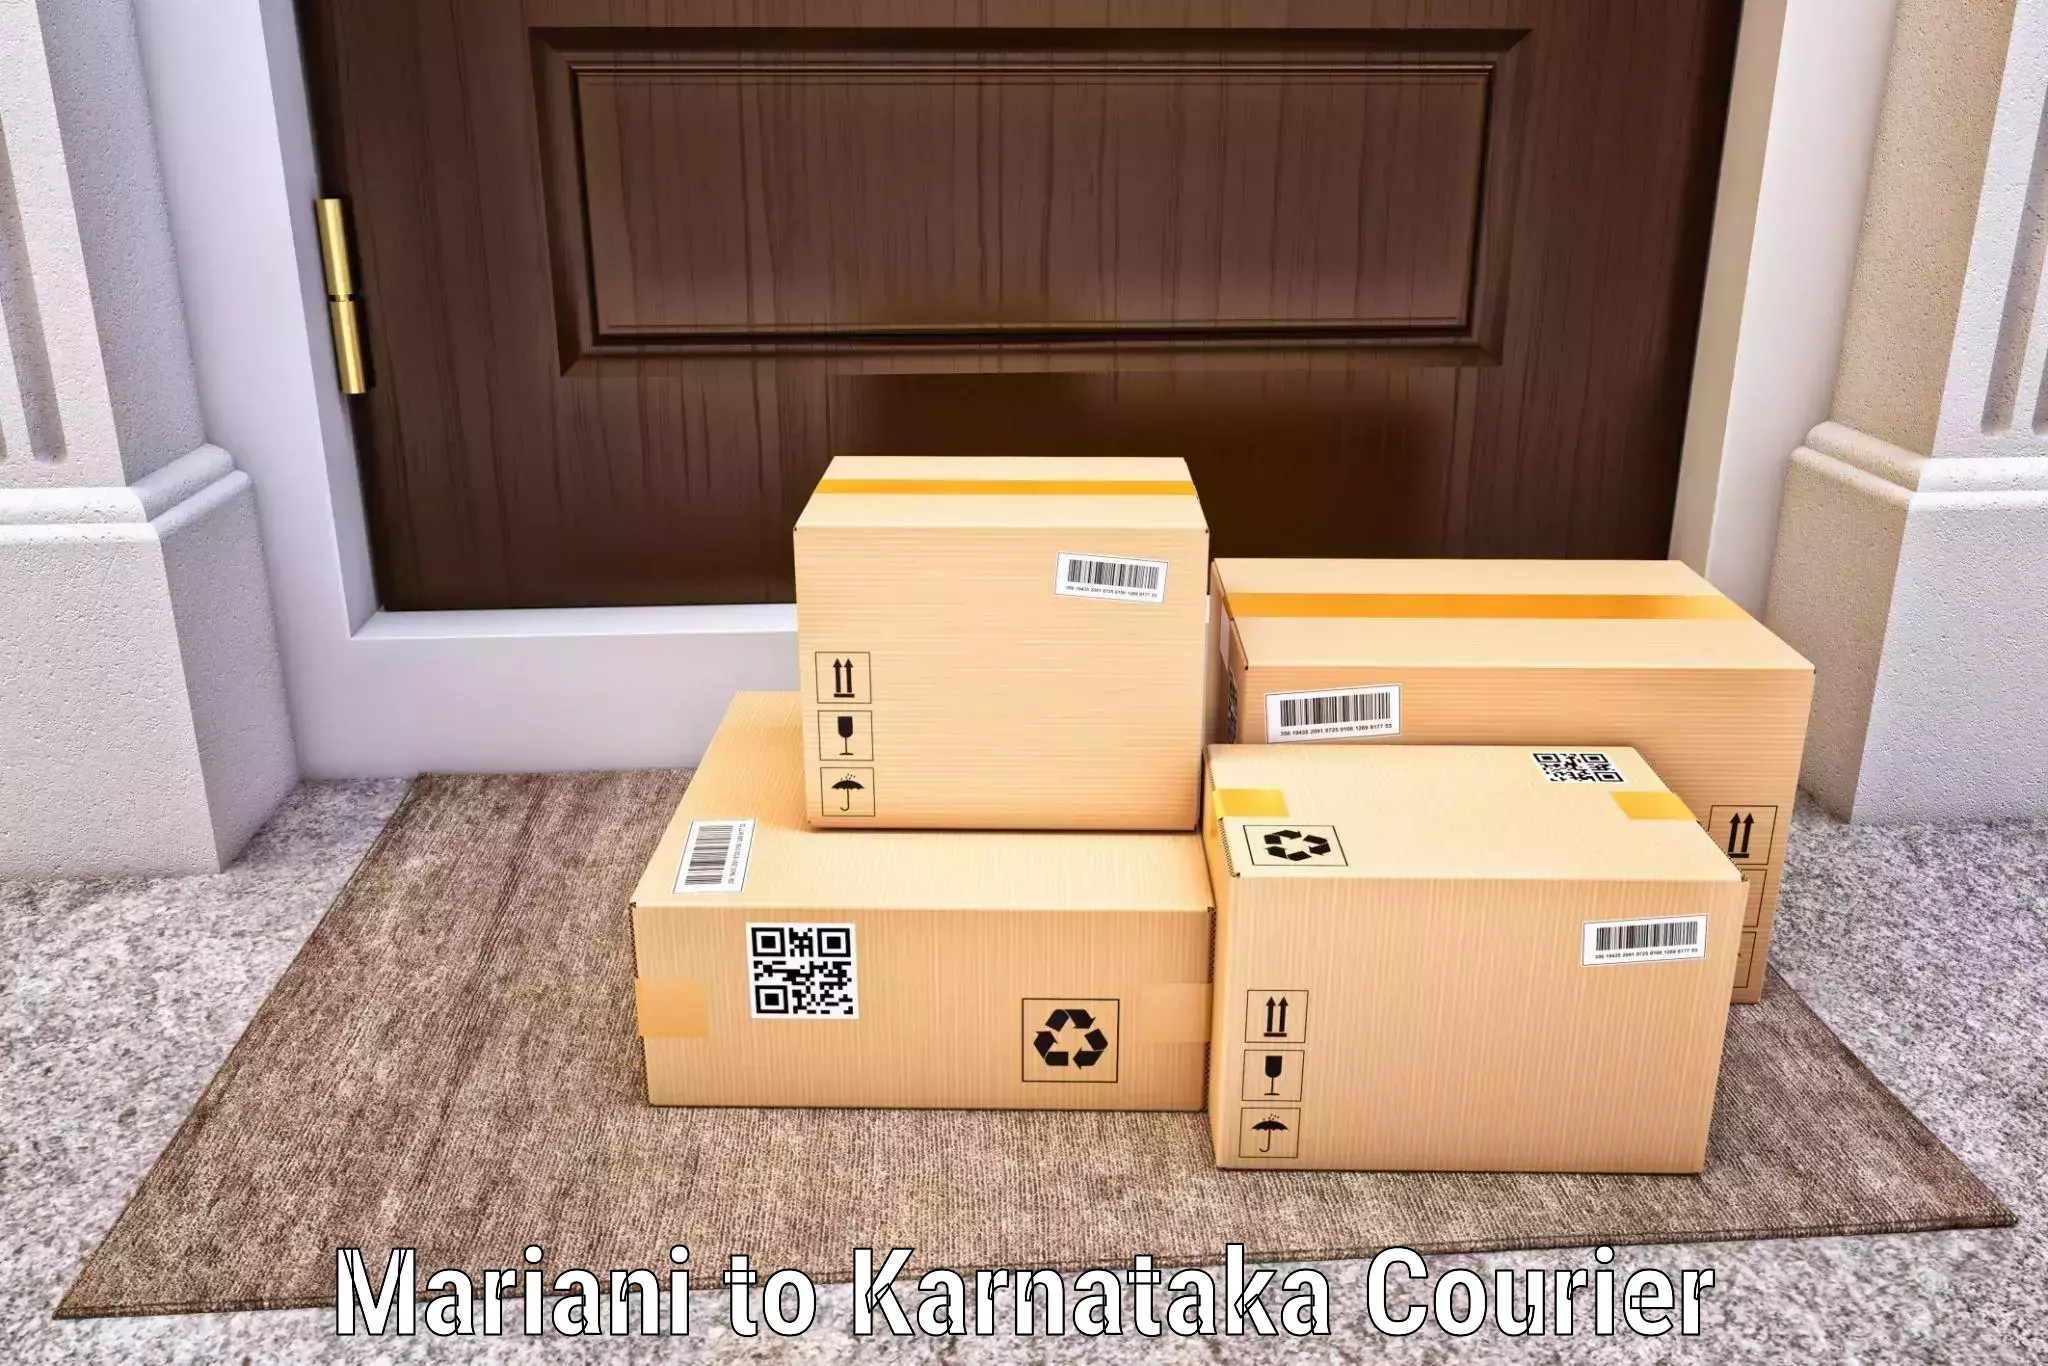 Express delivery capabilities Mariani to Huliyar